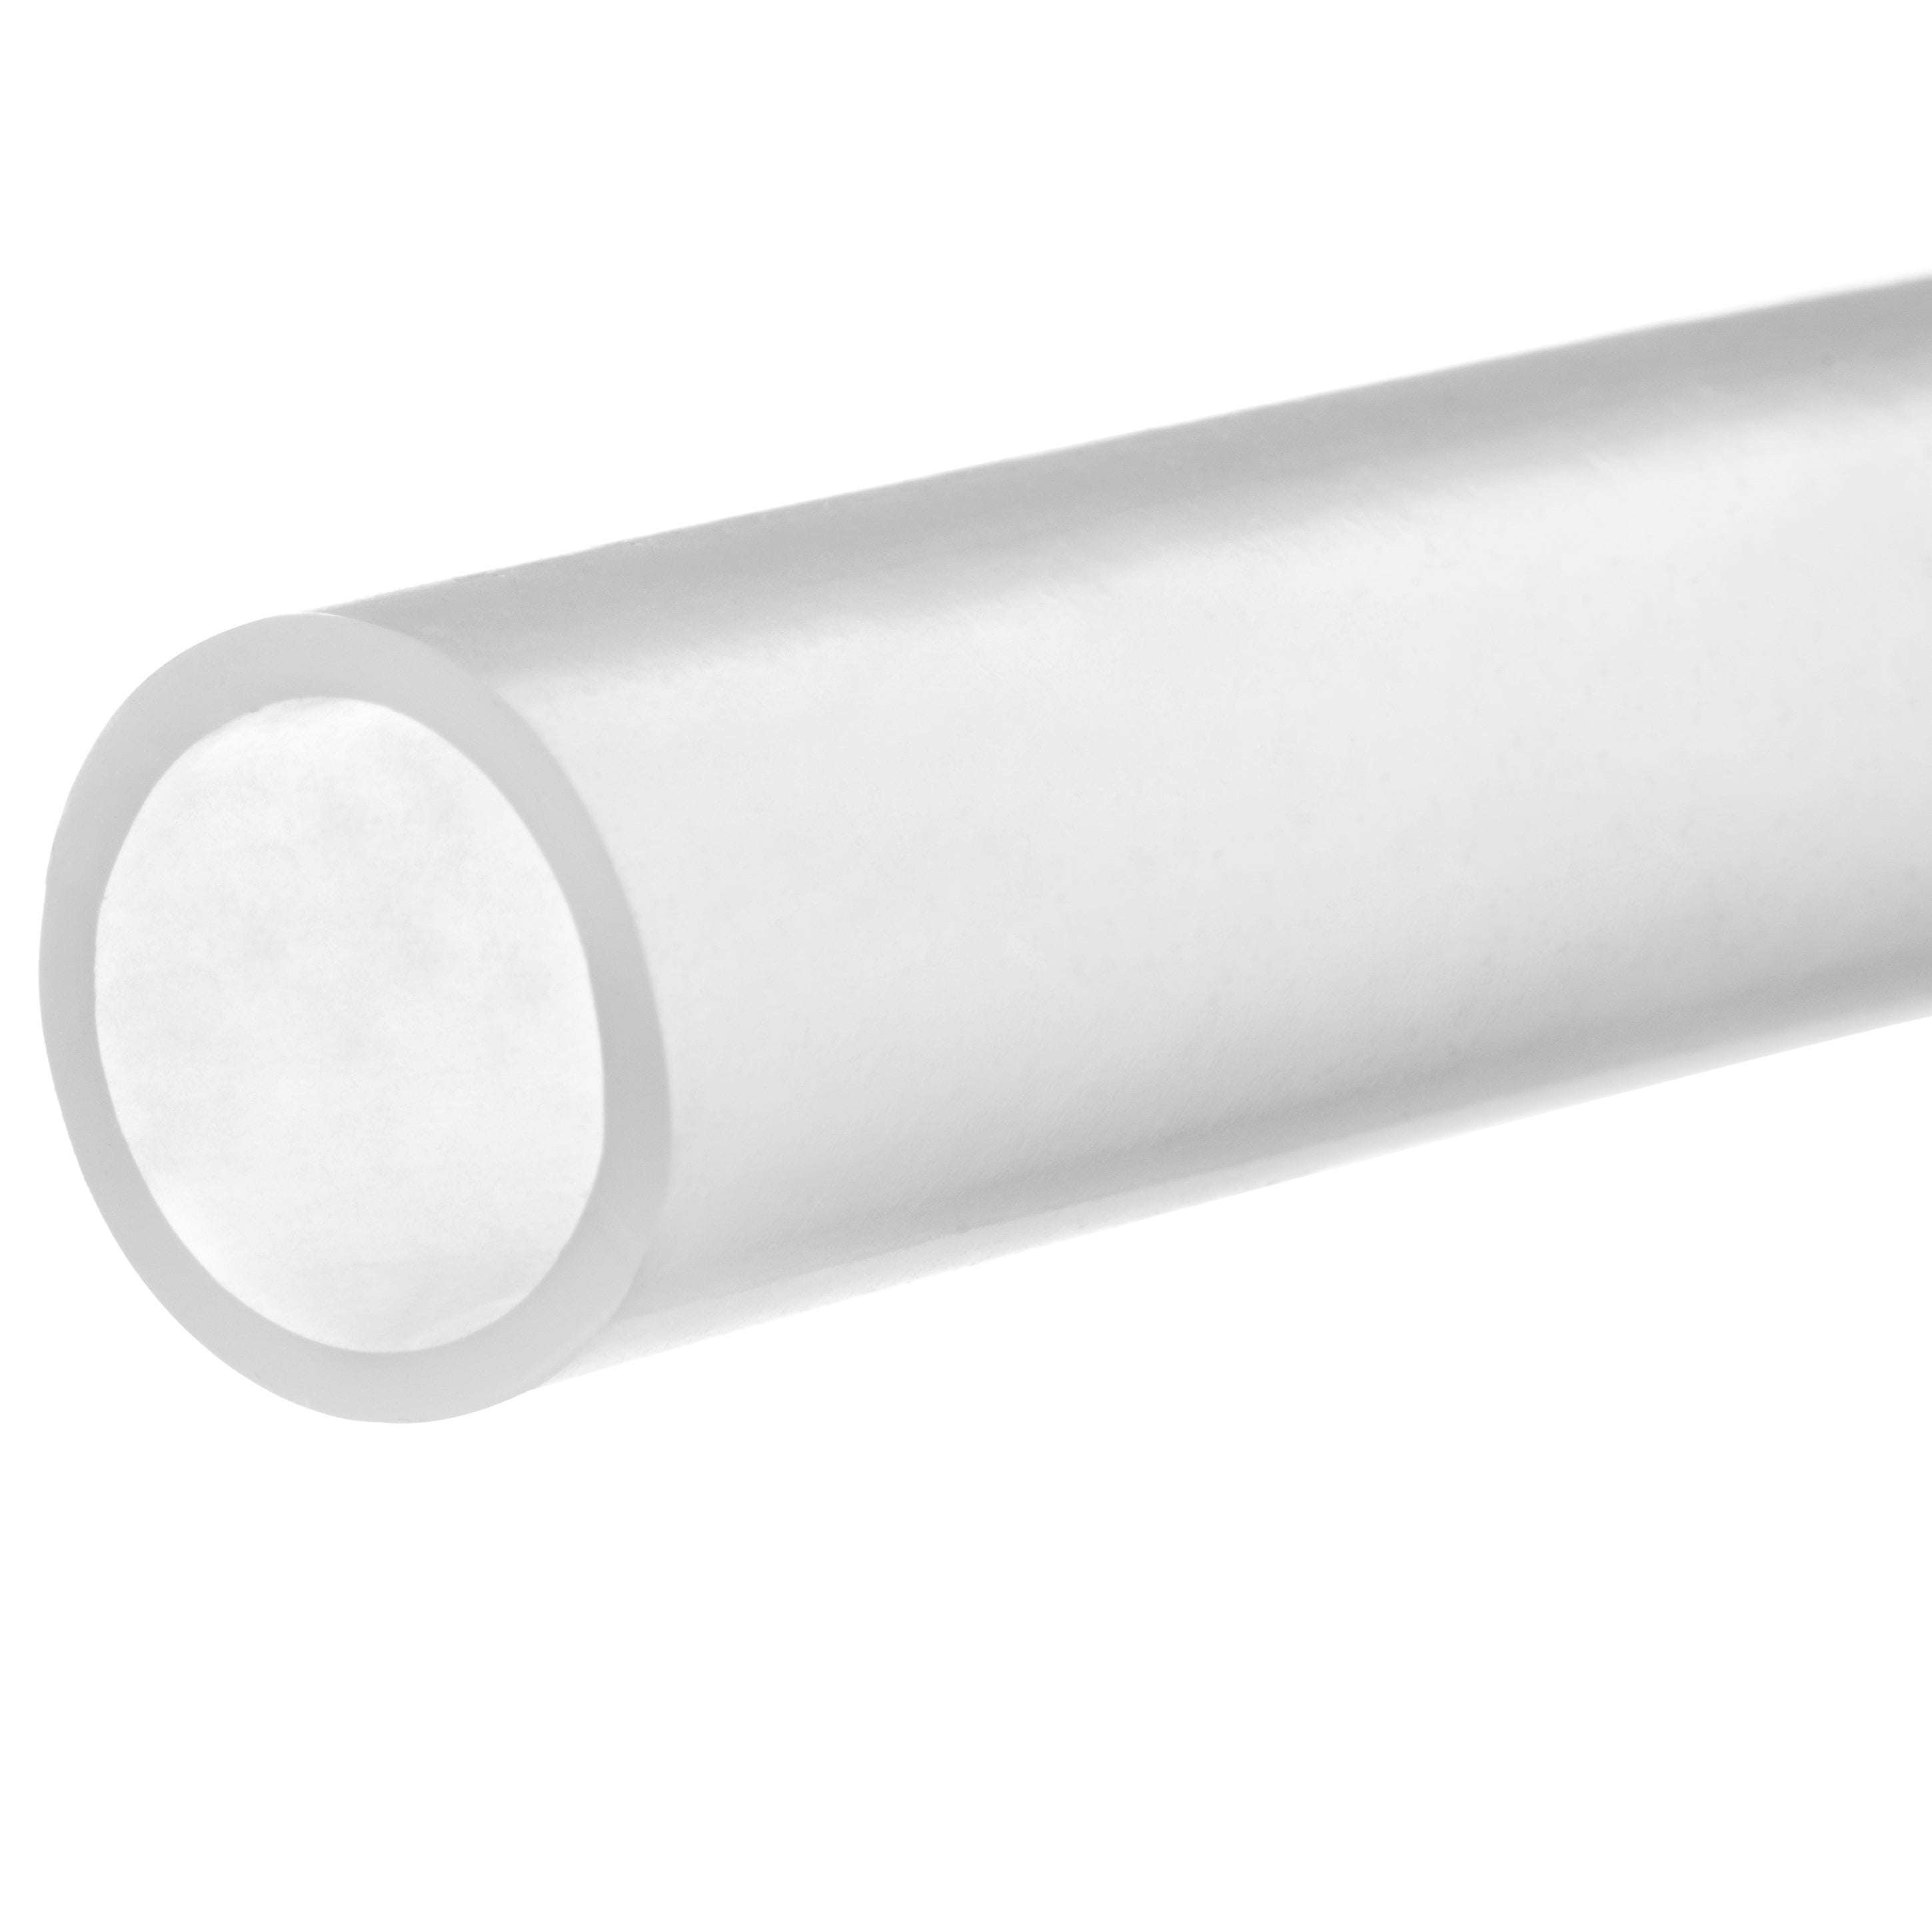 Long USA Sealing FDA PVC Tubing 1/8 ID x 3/16 OD x 2 ft 